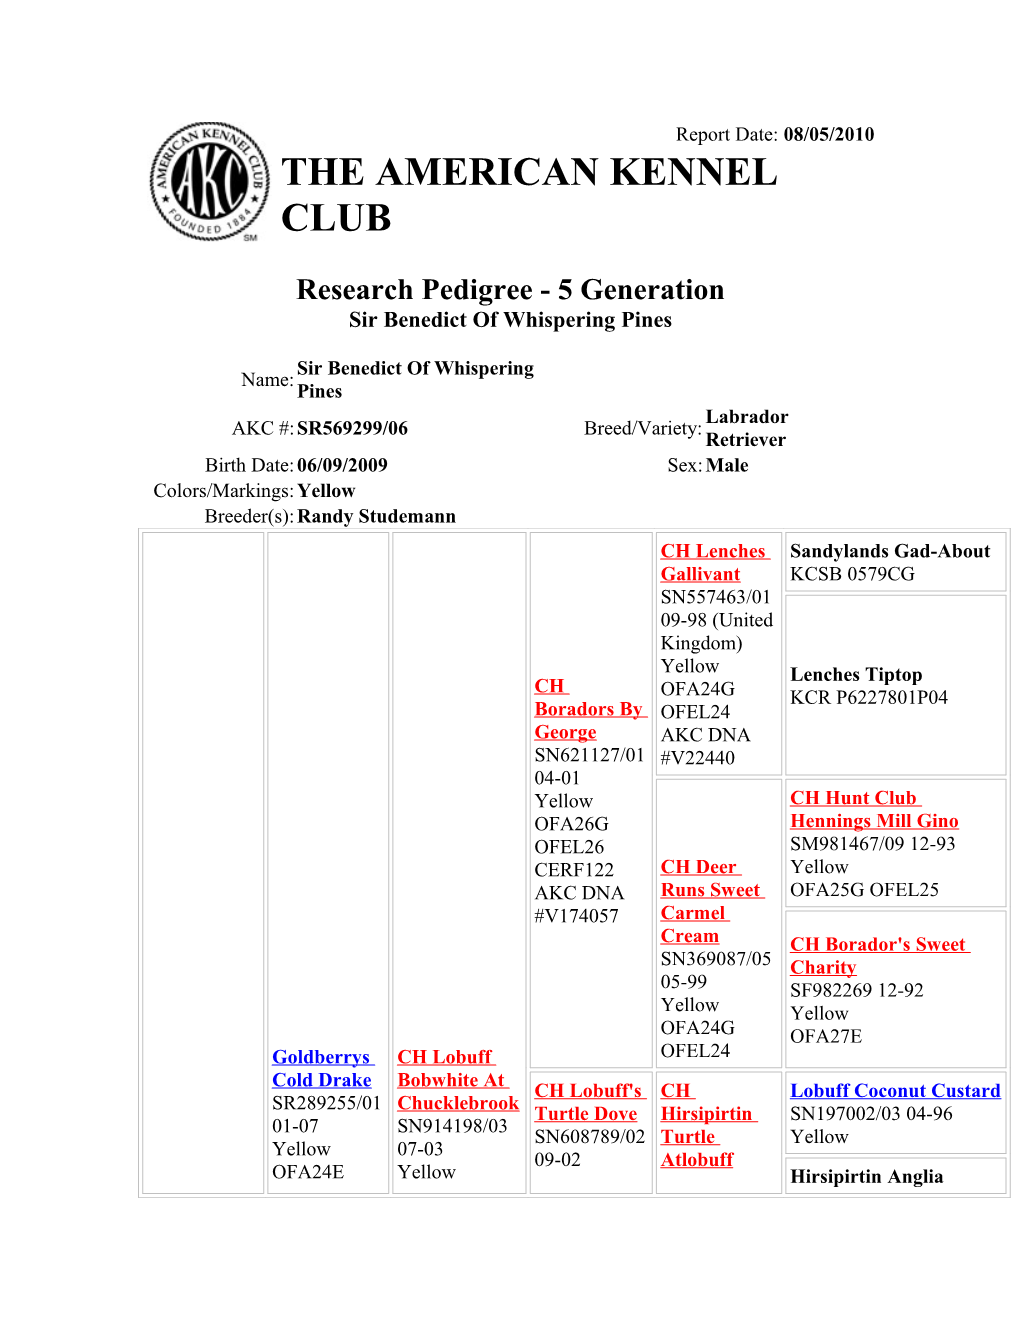 The American Kennel Club